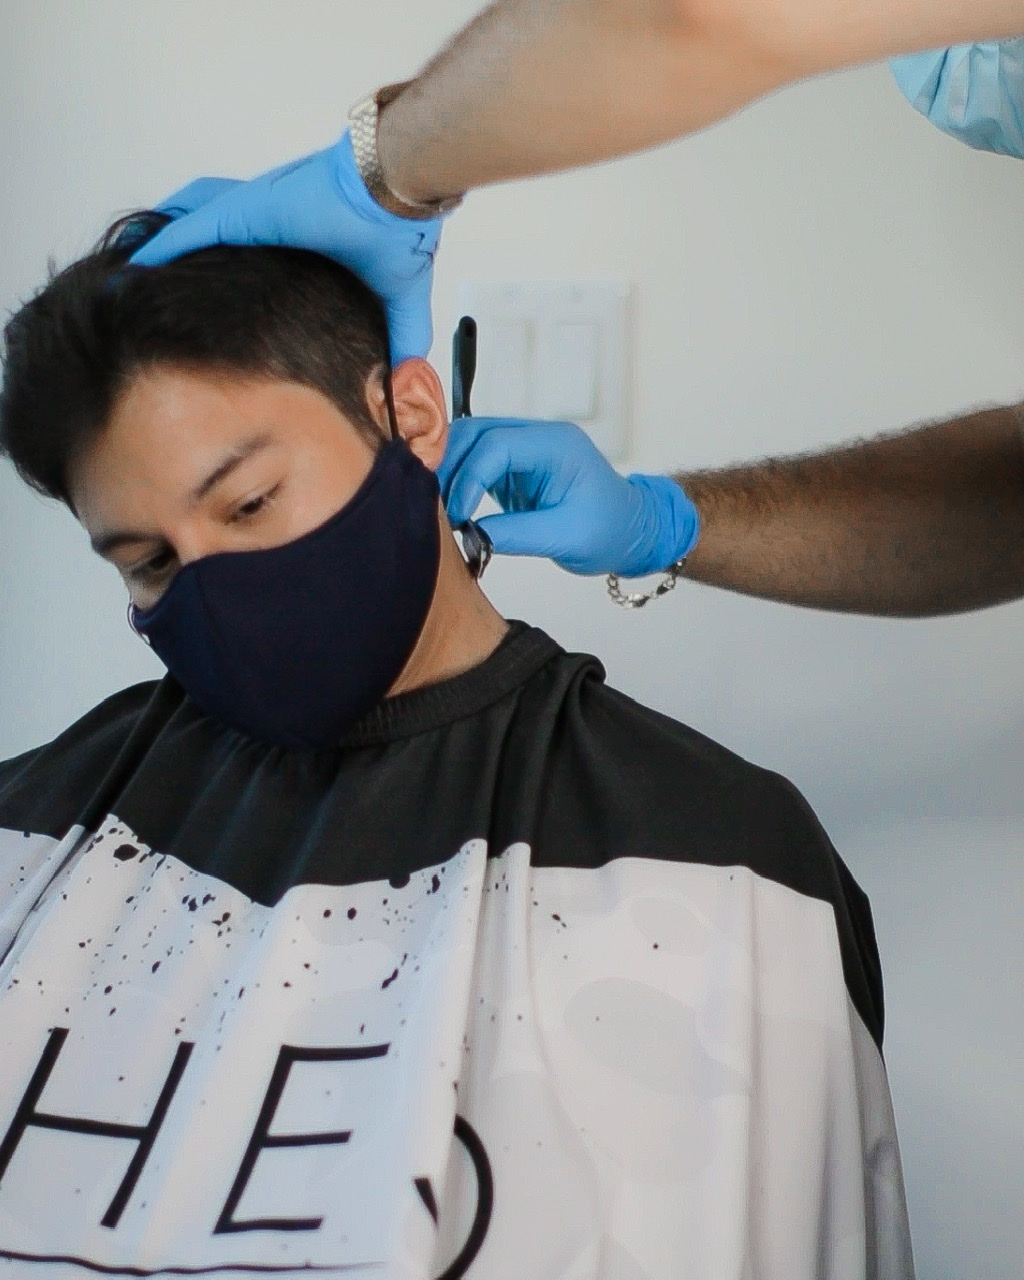 dandy in the bronx getting a hair cut - face mask hair cut - getting a hair cut with a face mask - face mask 